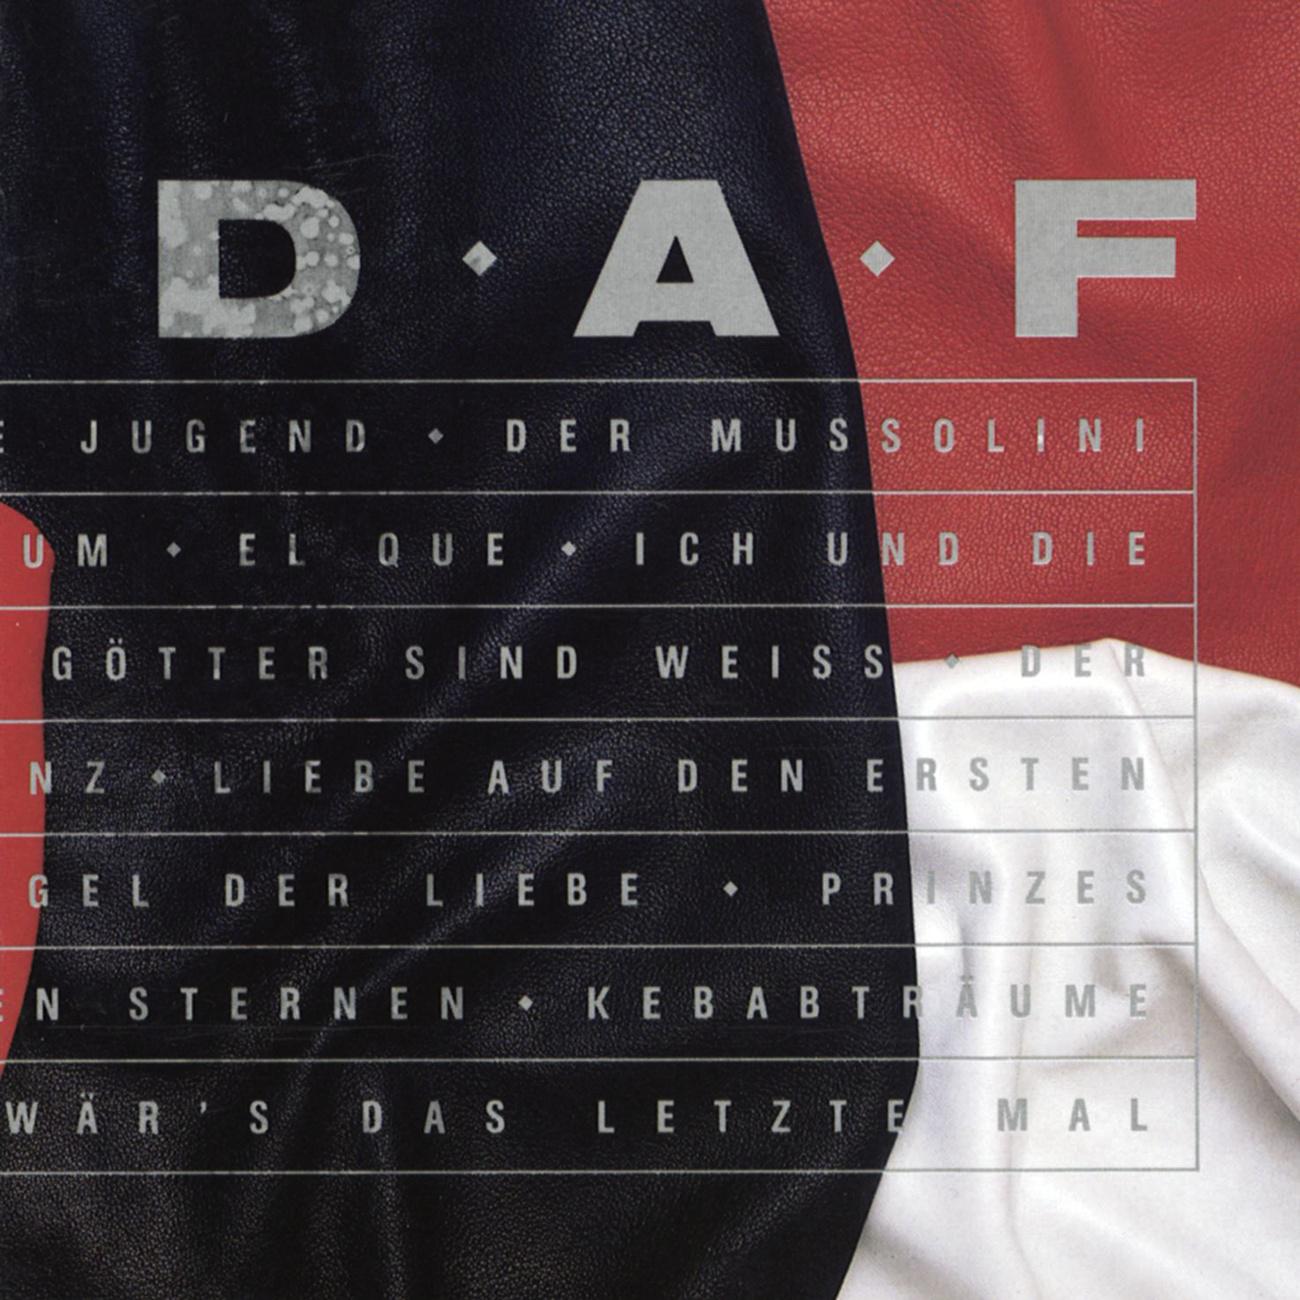 DAF - Der Mussolini (Original Version)